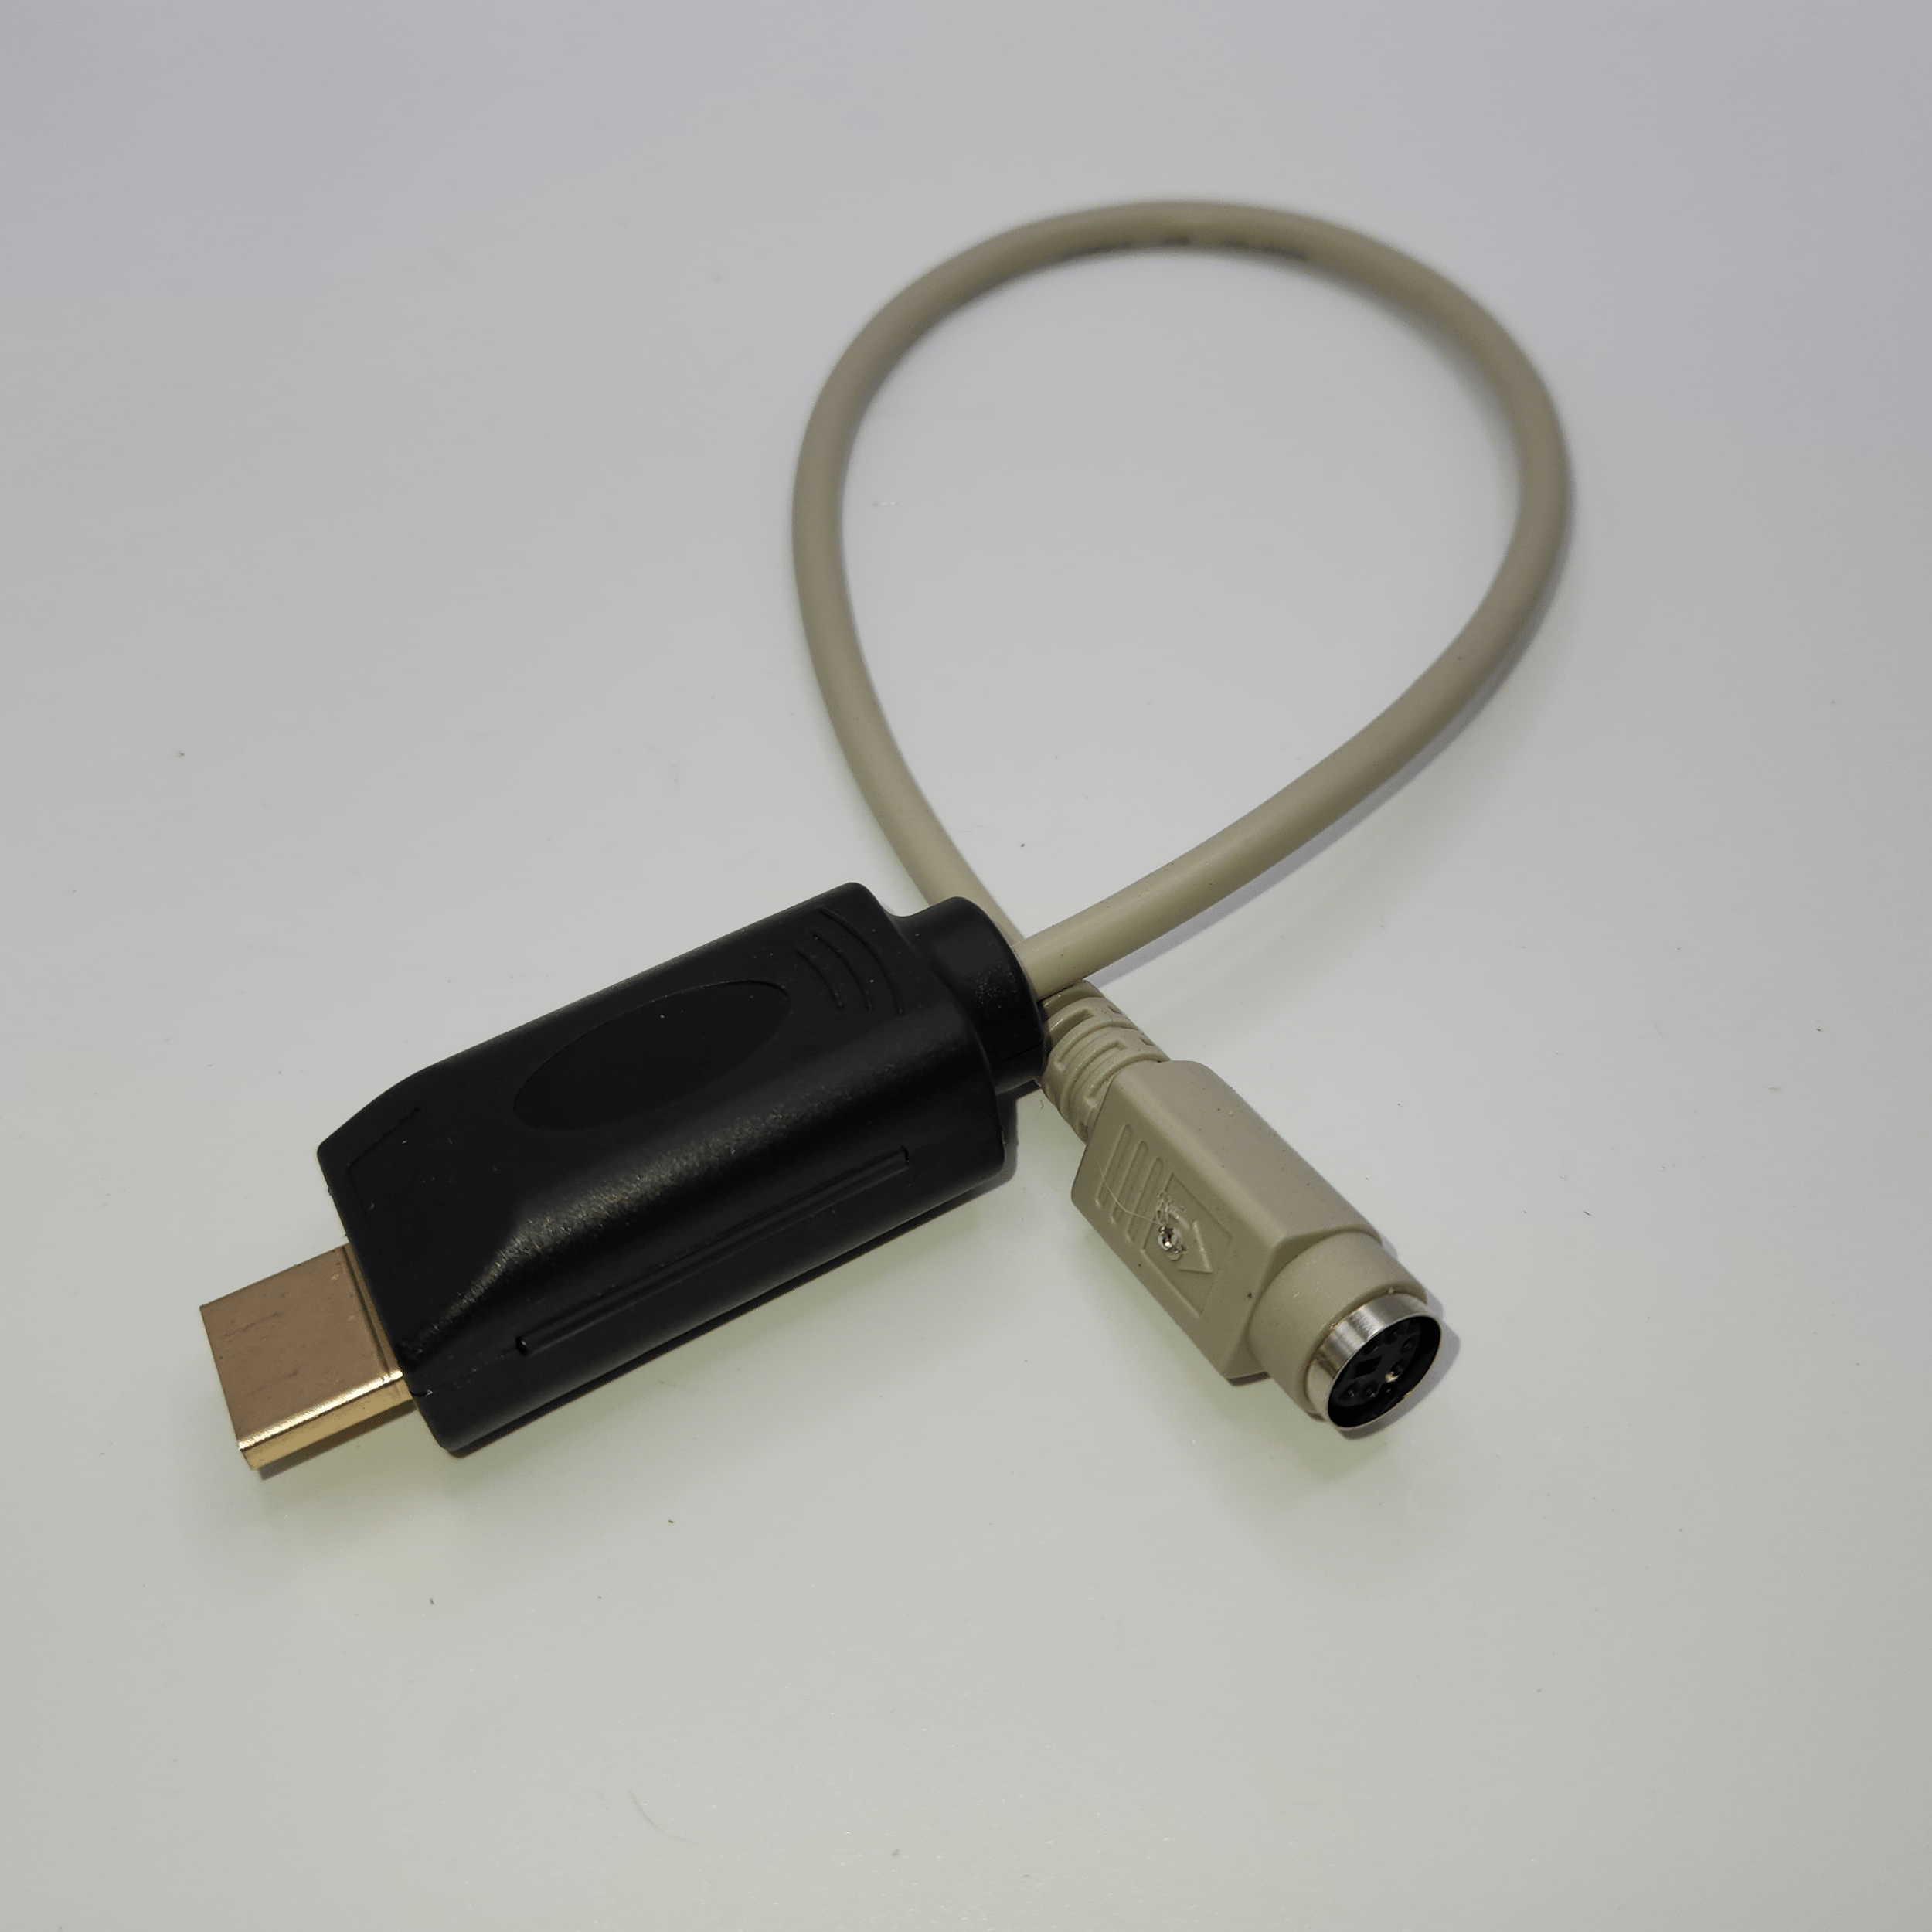 Female half of a RetroSpy Vision V.Smile cable